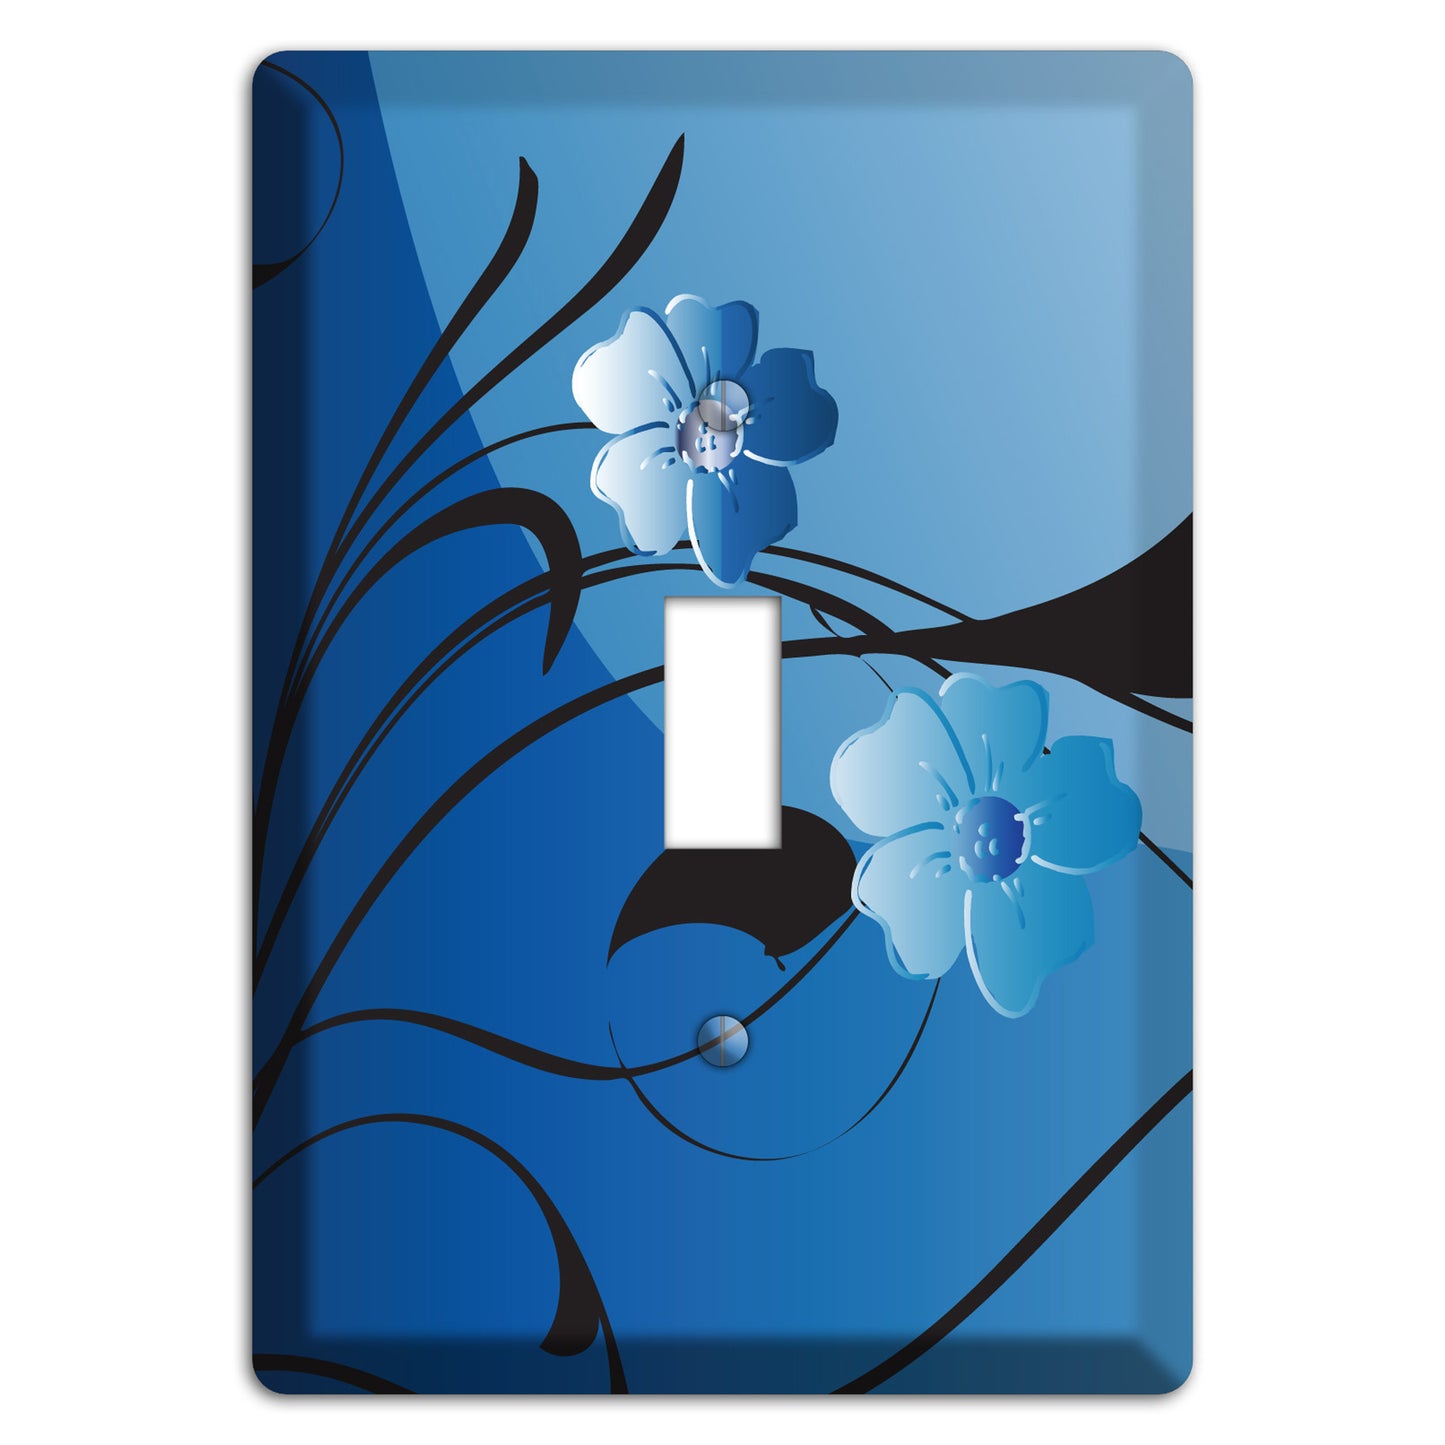 Blue Floral Sprig Cover Plates